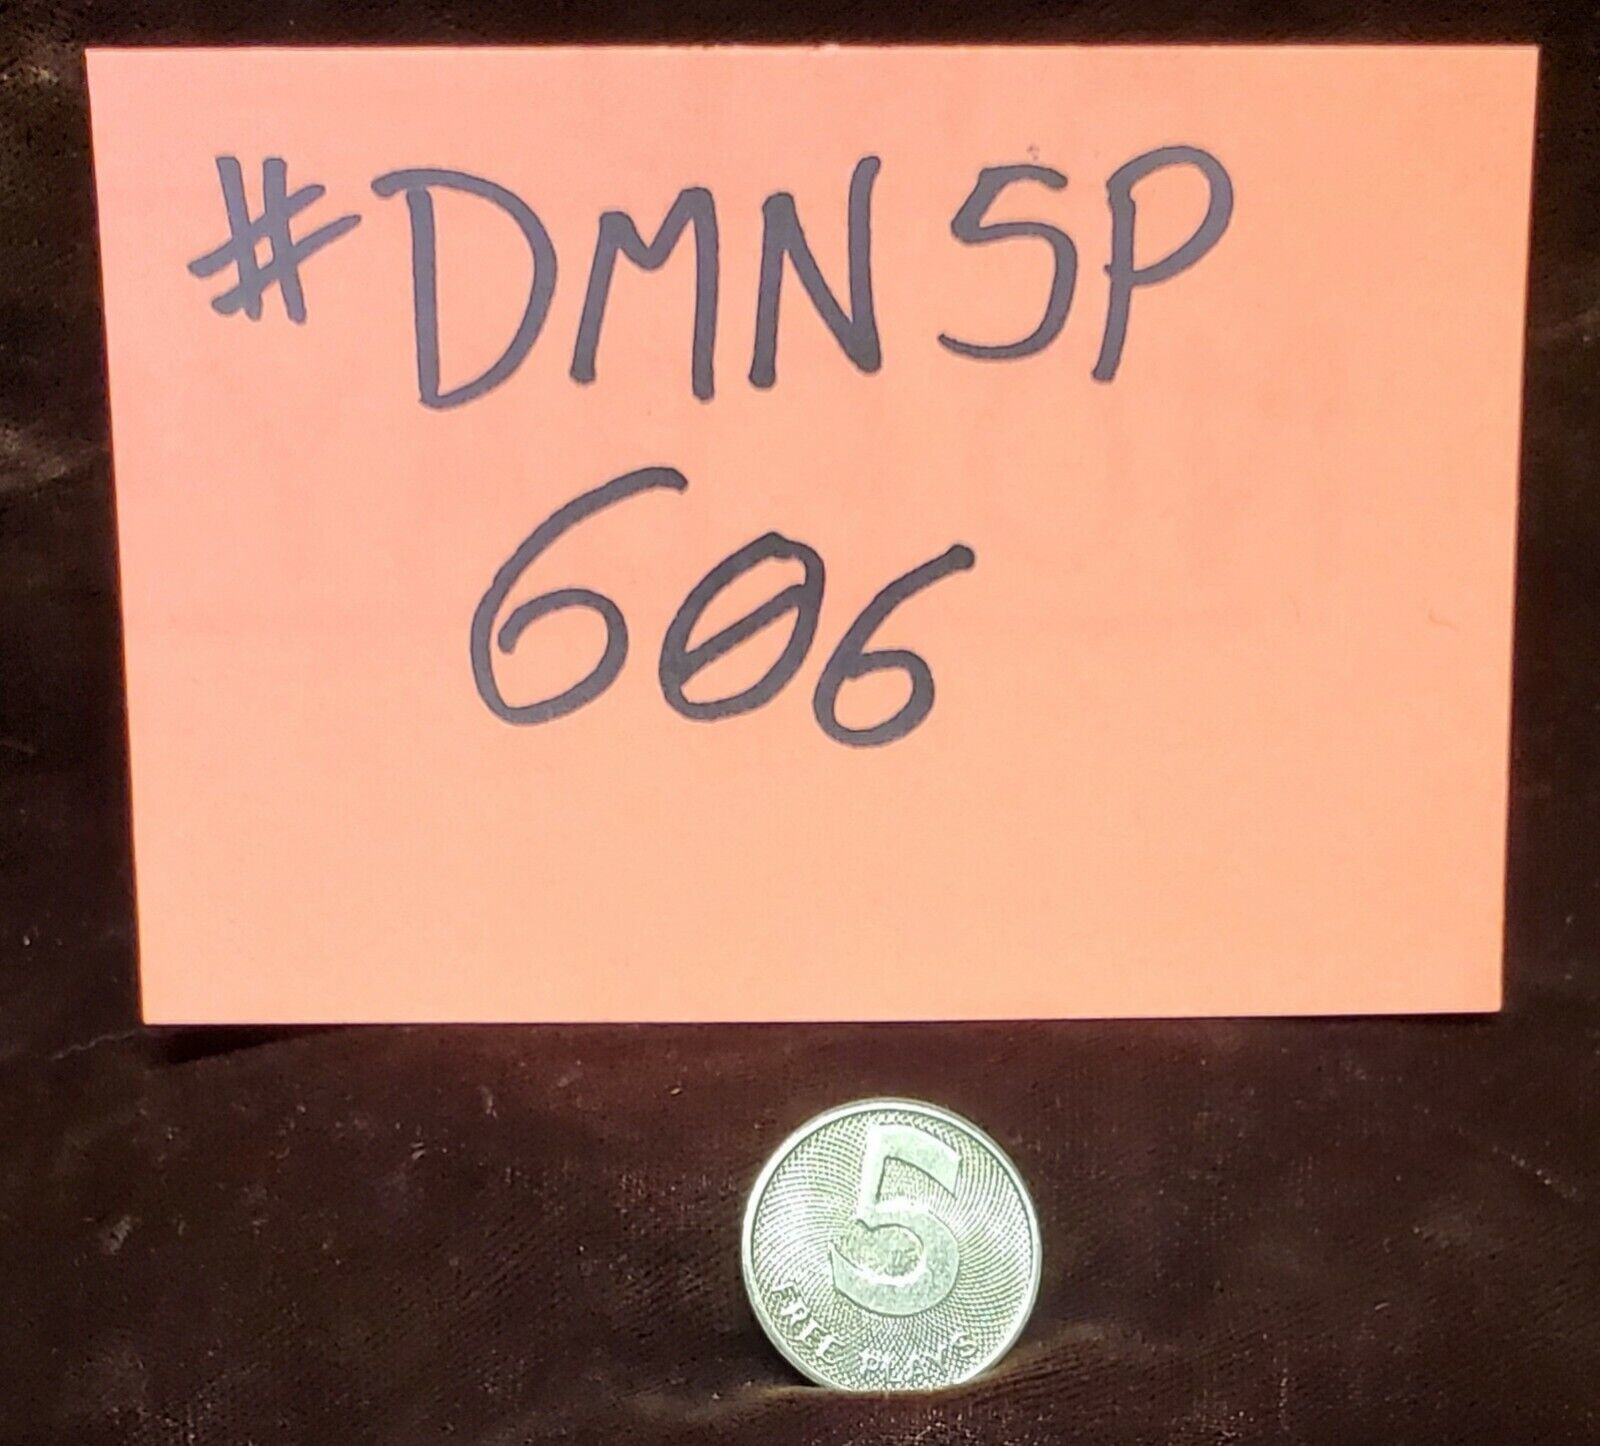 DAVAL MERCURY TOKEN ANTIQUE TRADE STIMULATOR / SLOT MACHINE #DMN5P-606